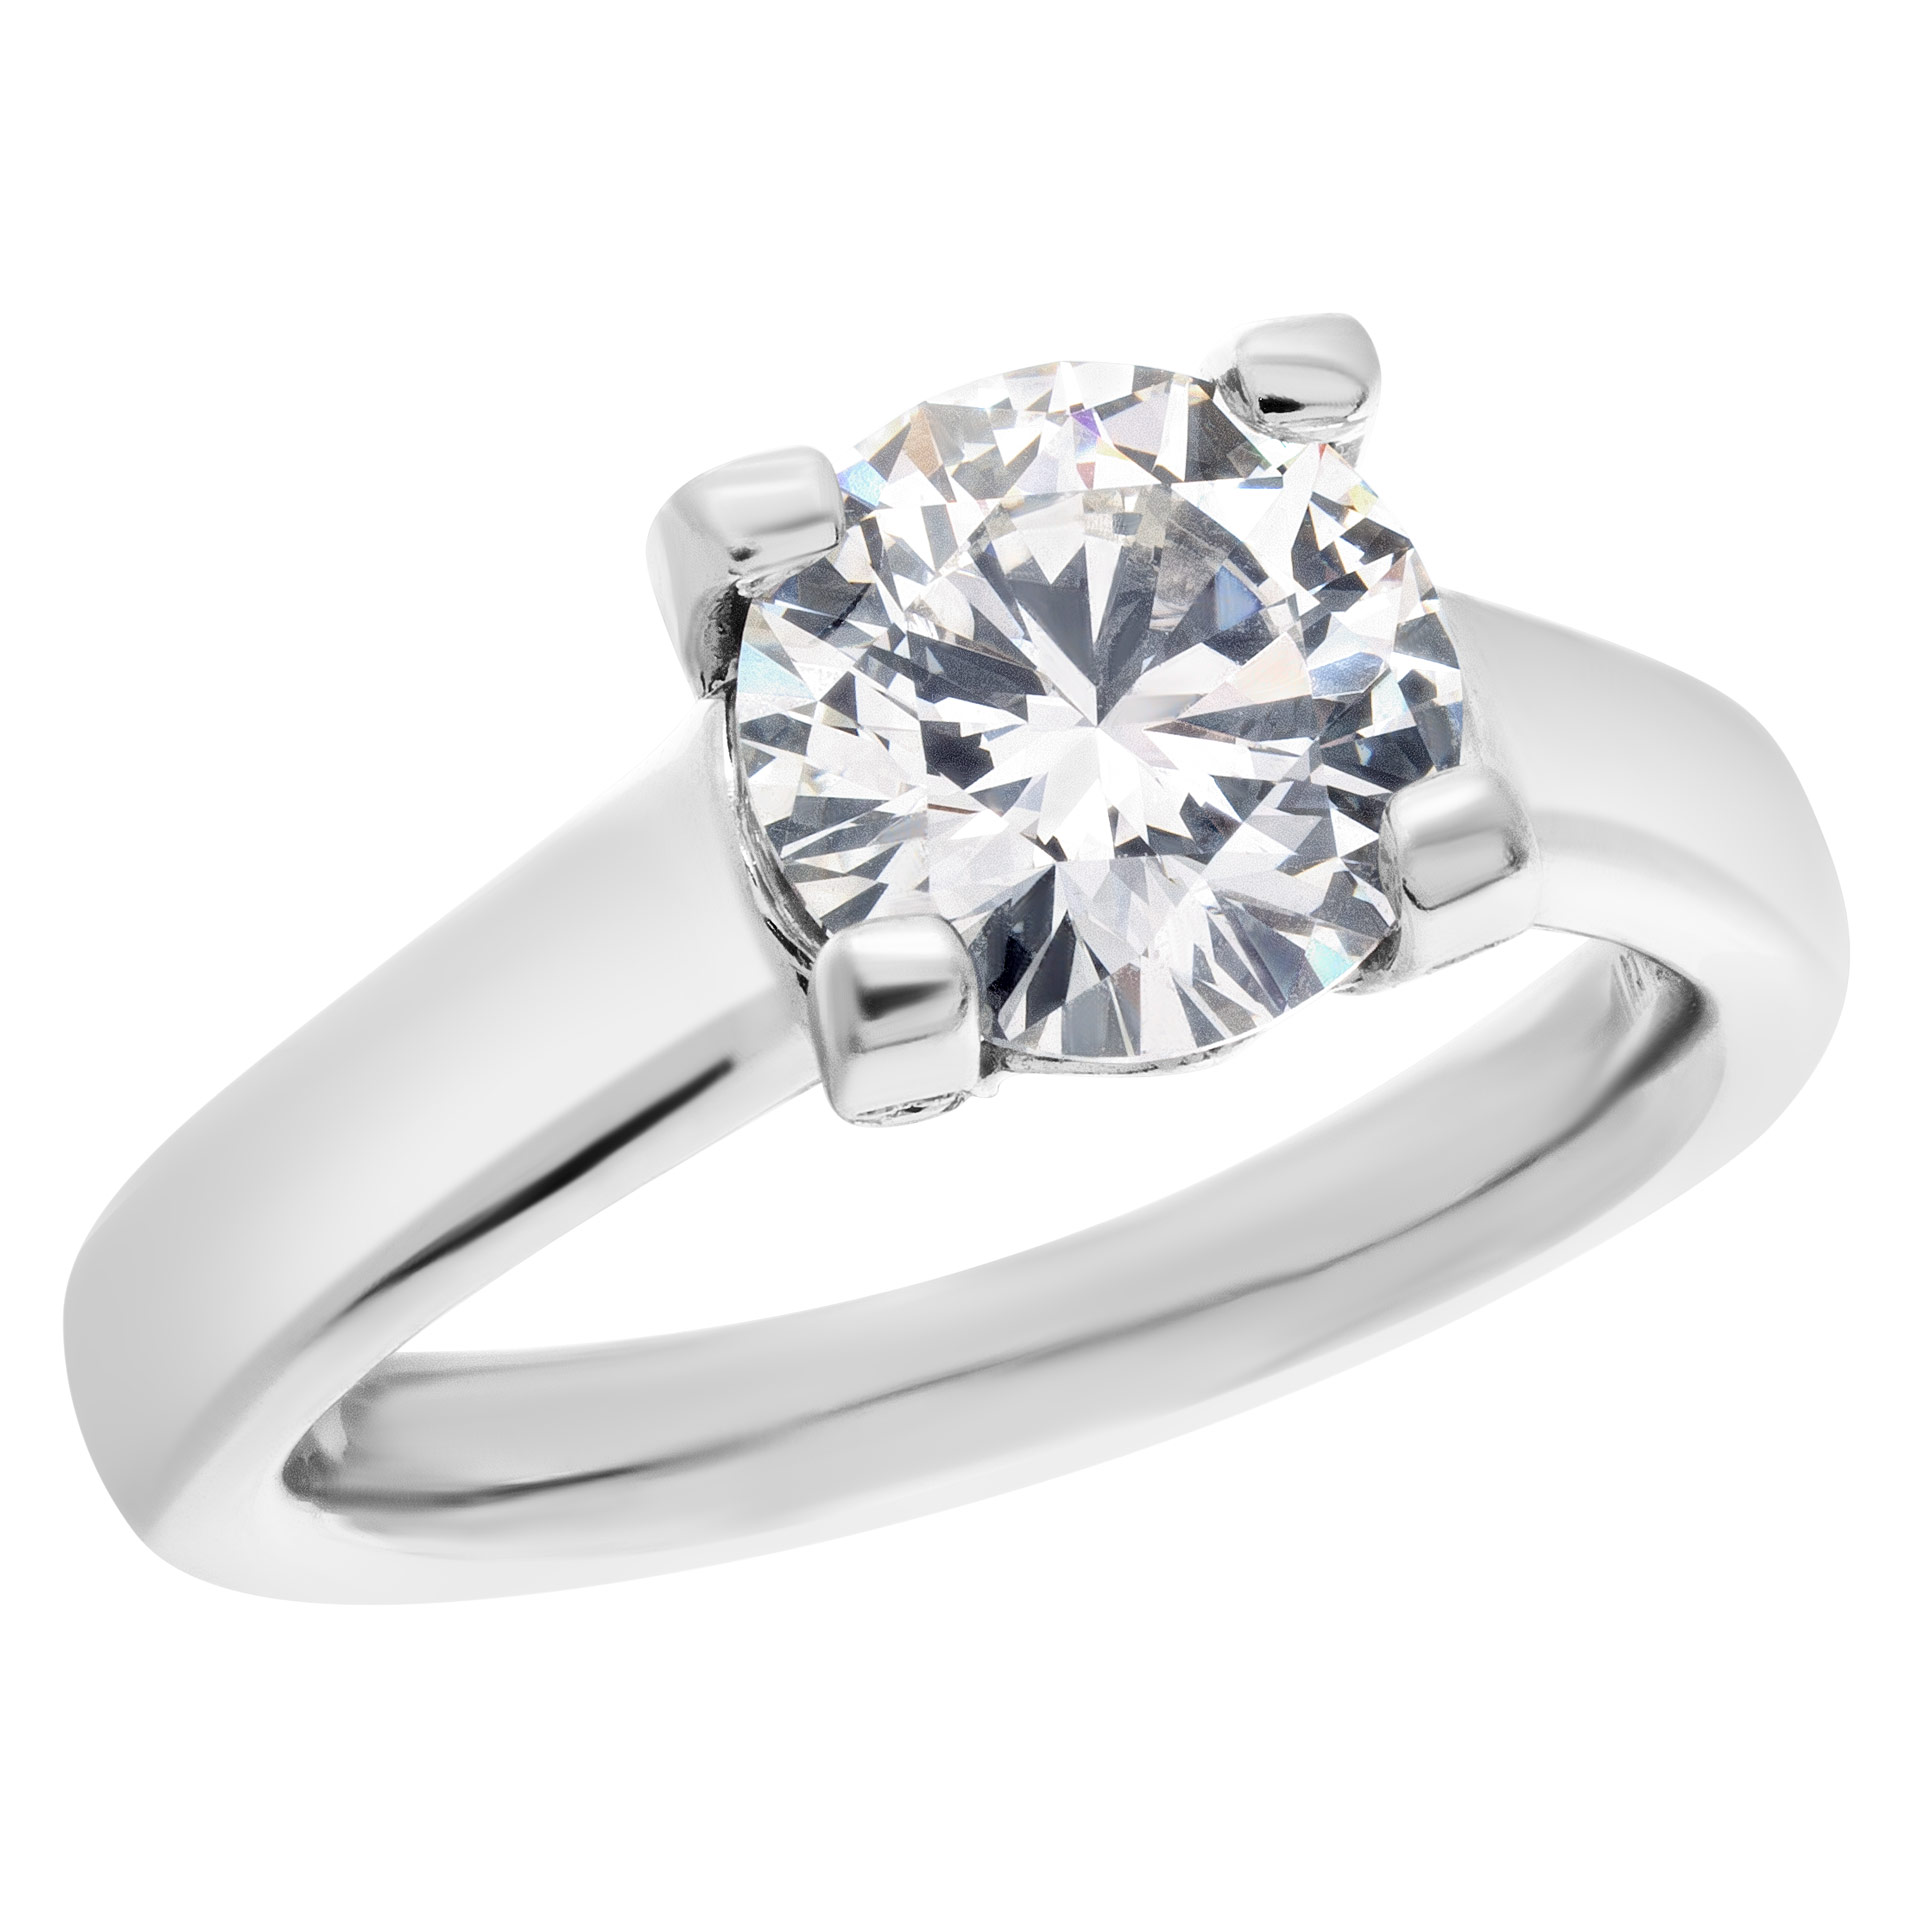 GIA certified round brilliant cut diamond 1.51 carat (I color, VS2 clarity) ring image 2